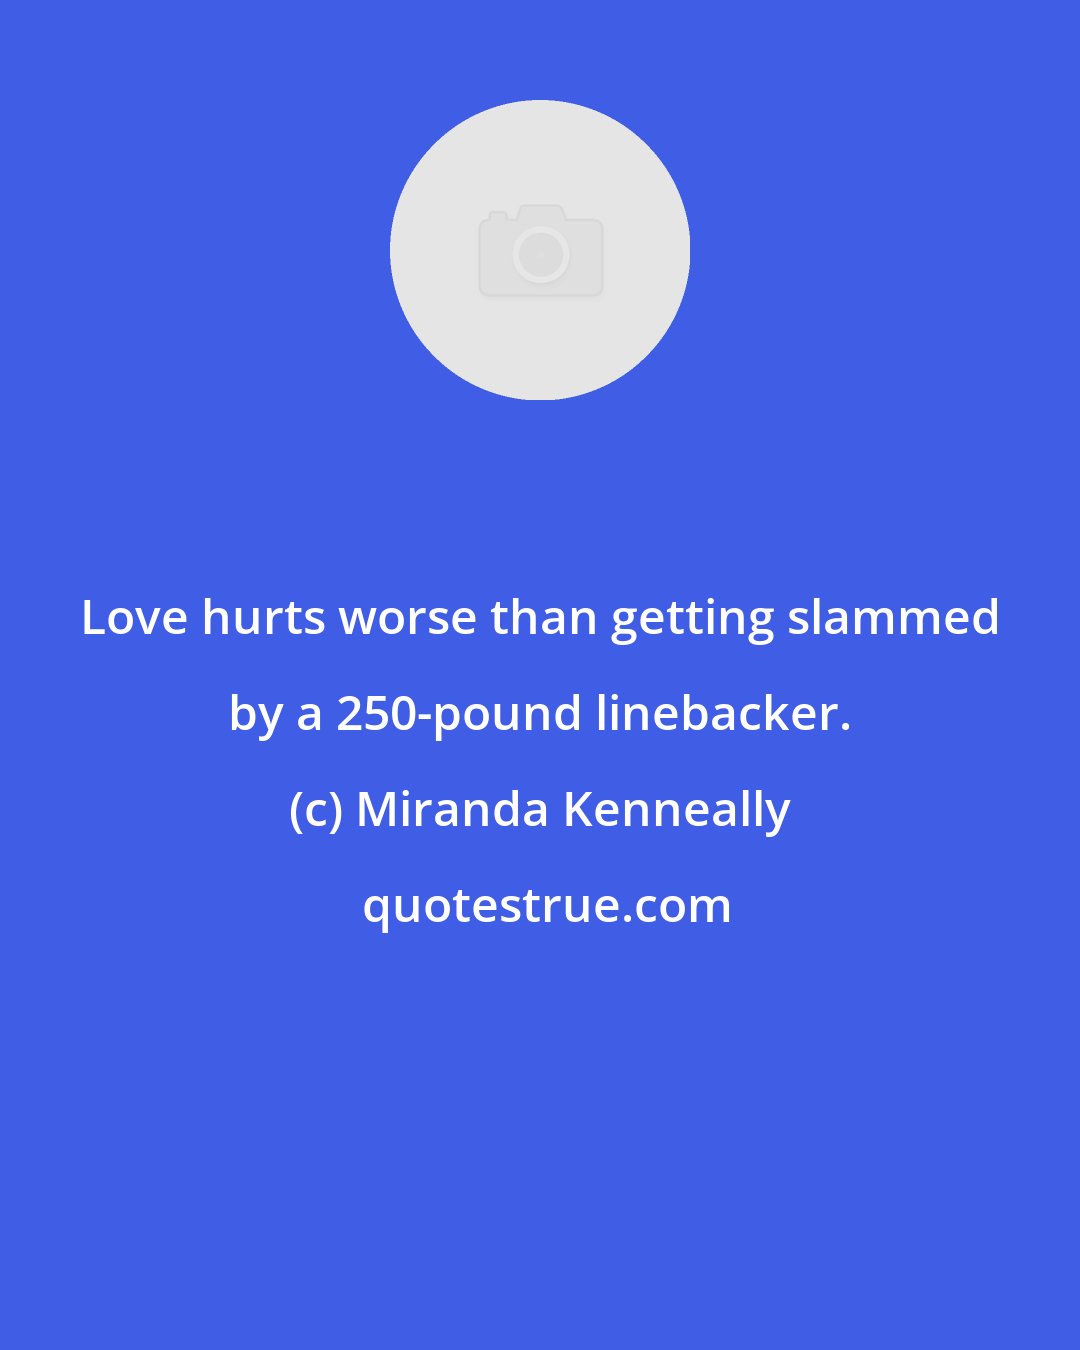 Miranda Kenneally: Love hurts worse than getting slammed by a 250-pound linebacker.